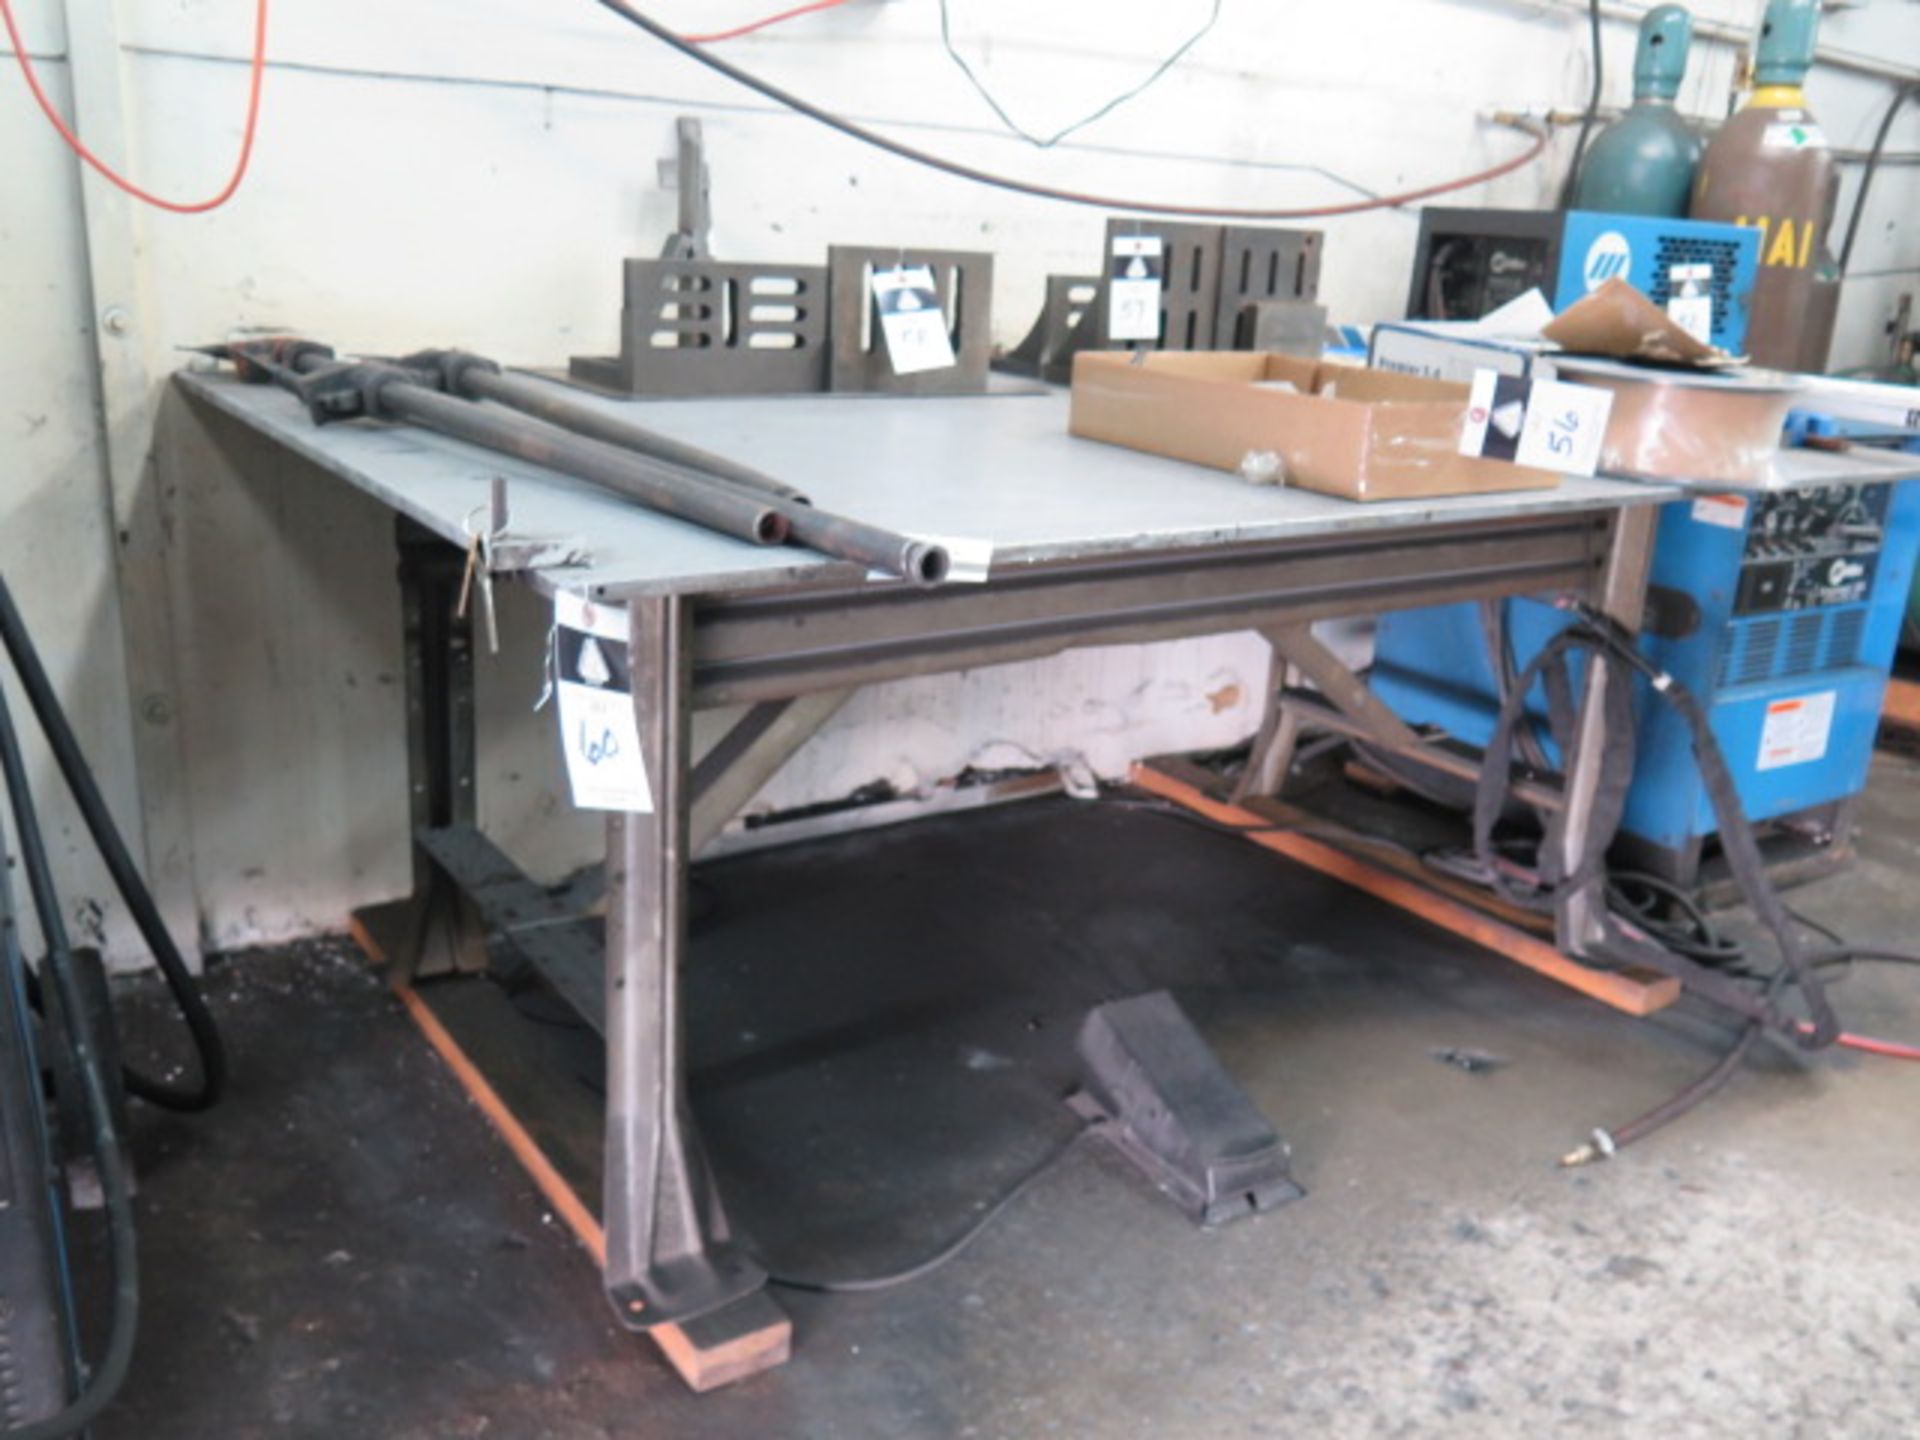 Aluminum Top Welding Table (SOLD AS-IS - NO WARRANTY)